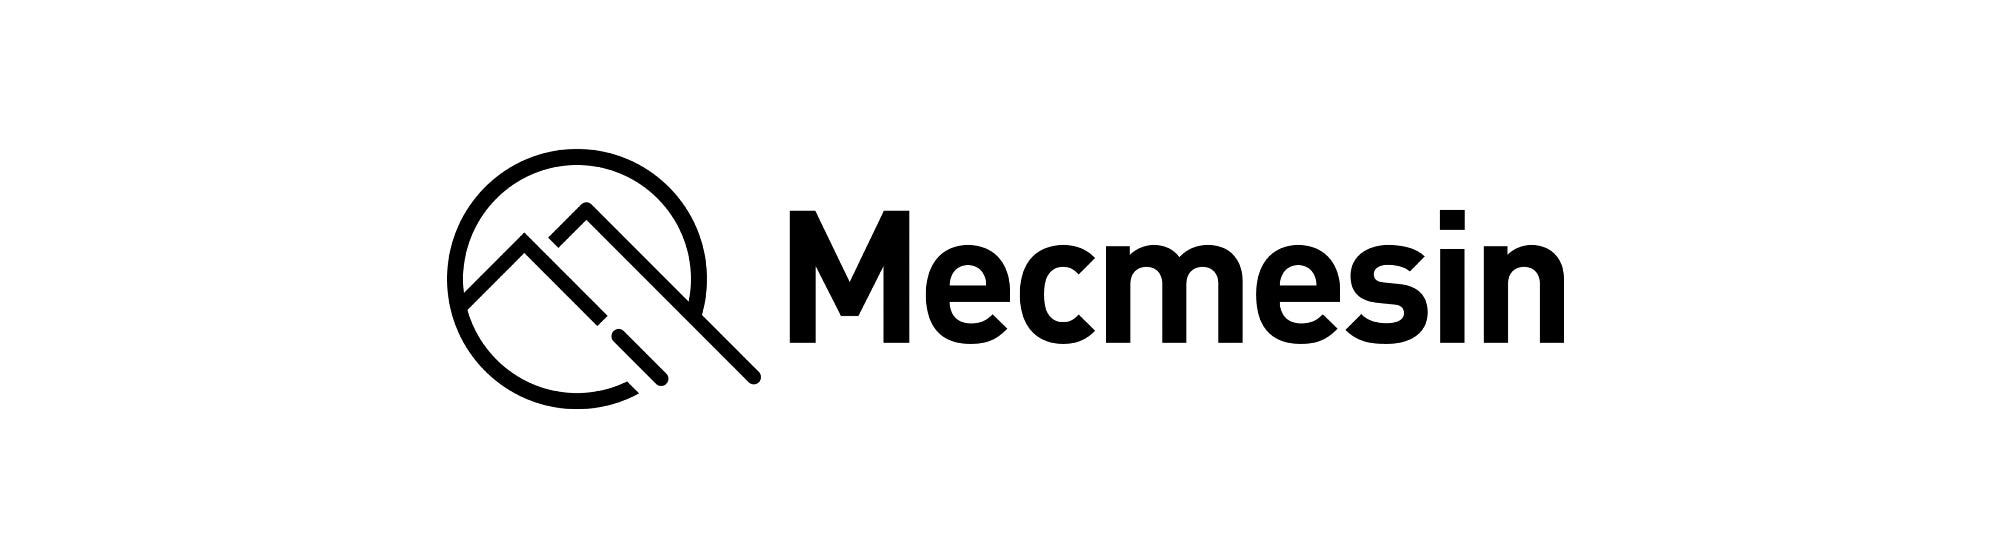 Mecmesin Ltd logo.